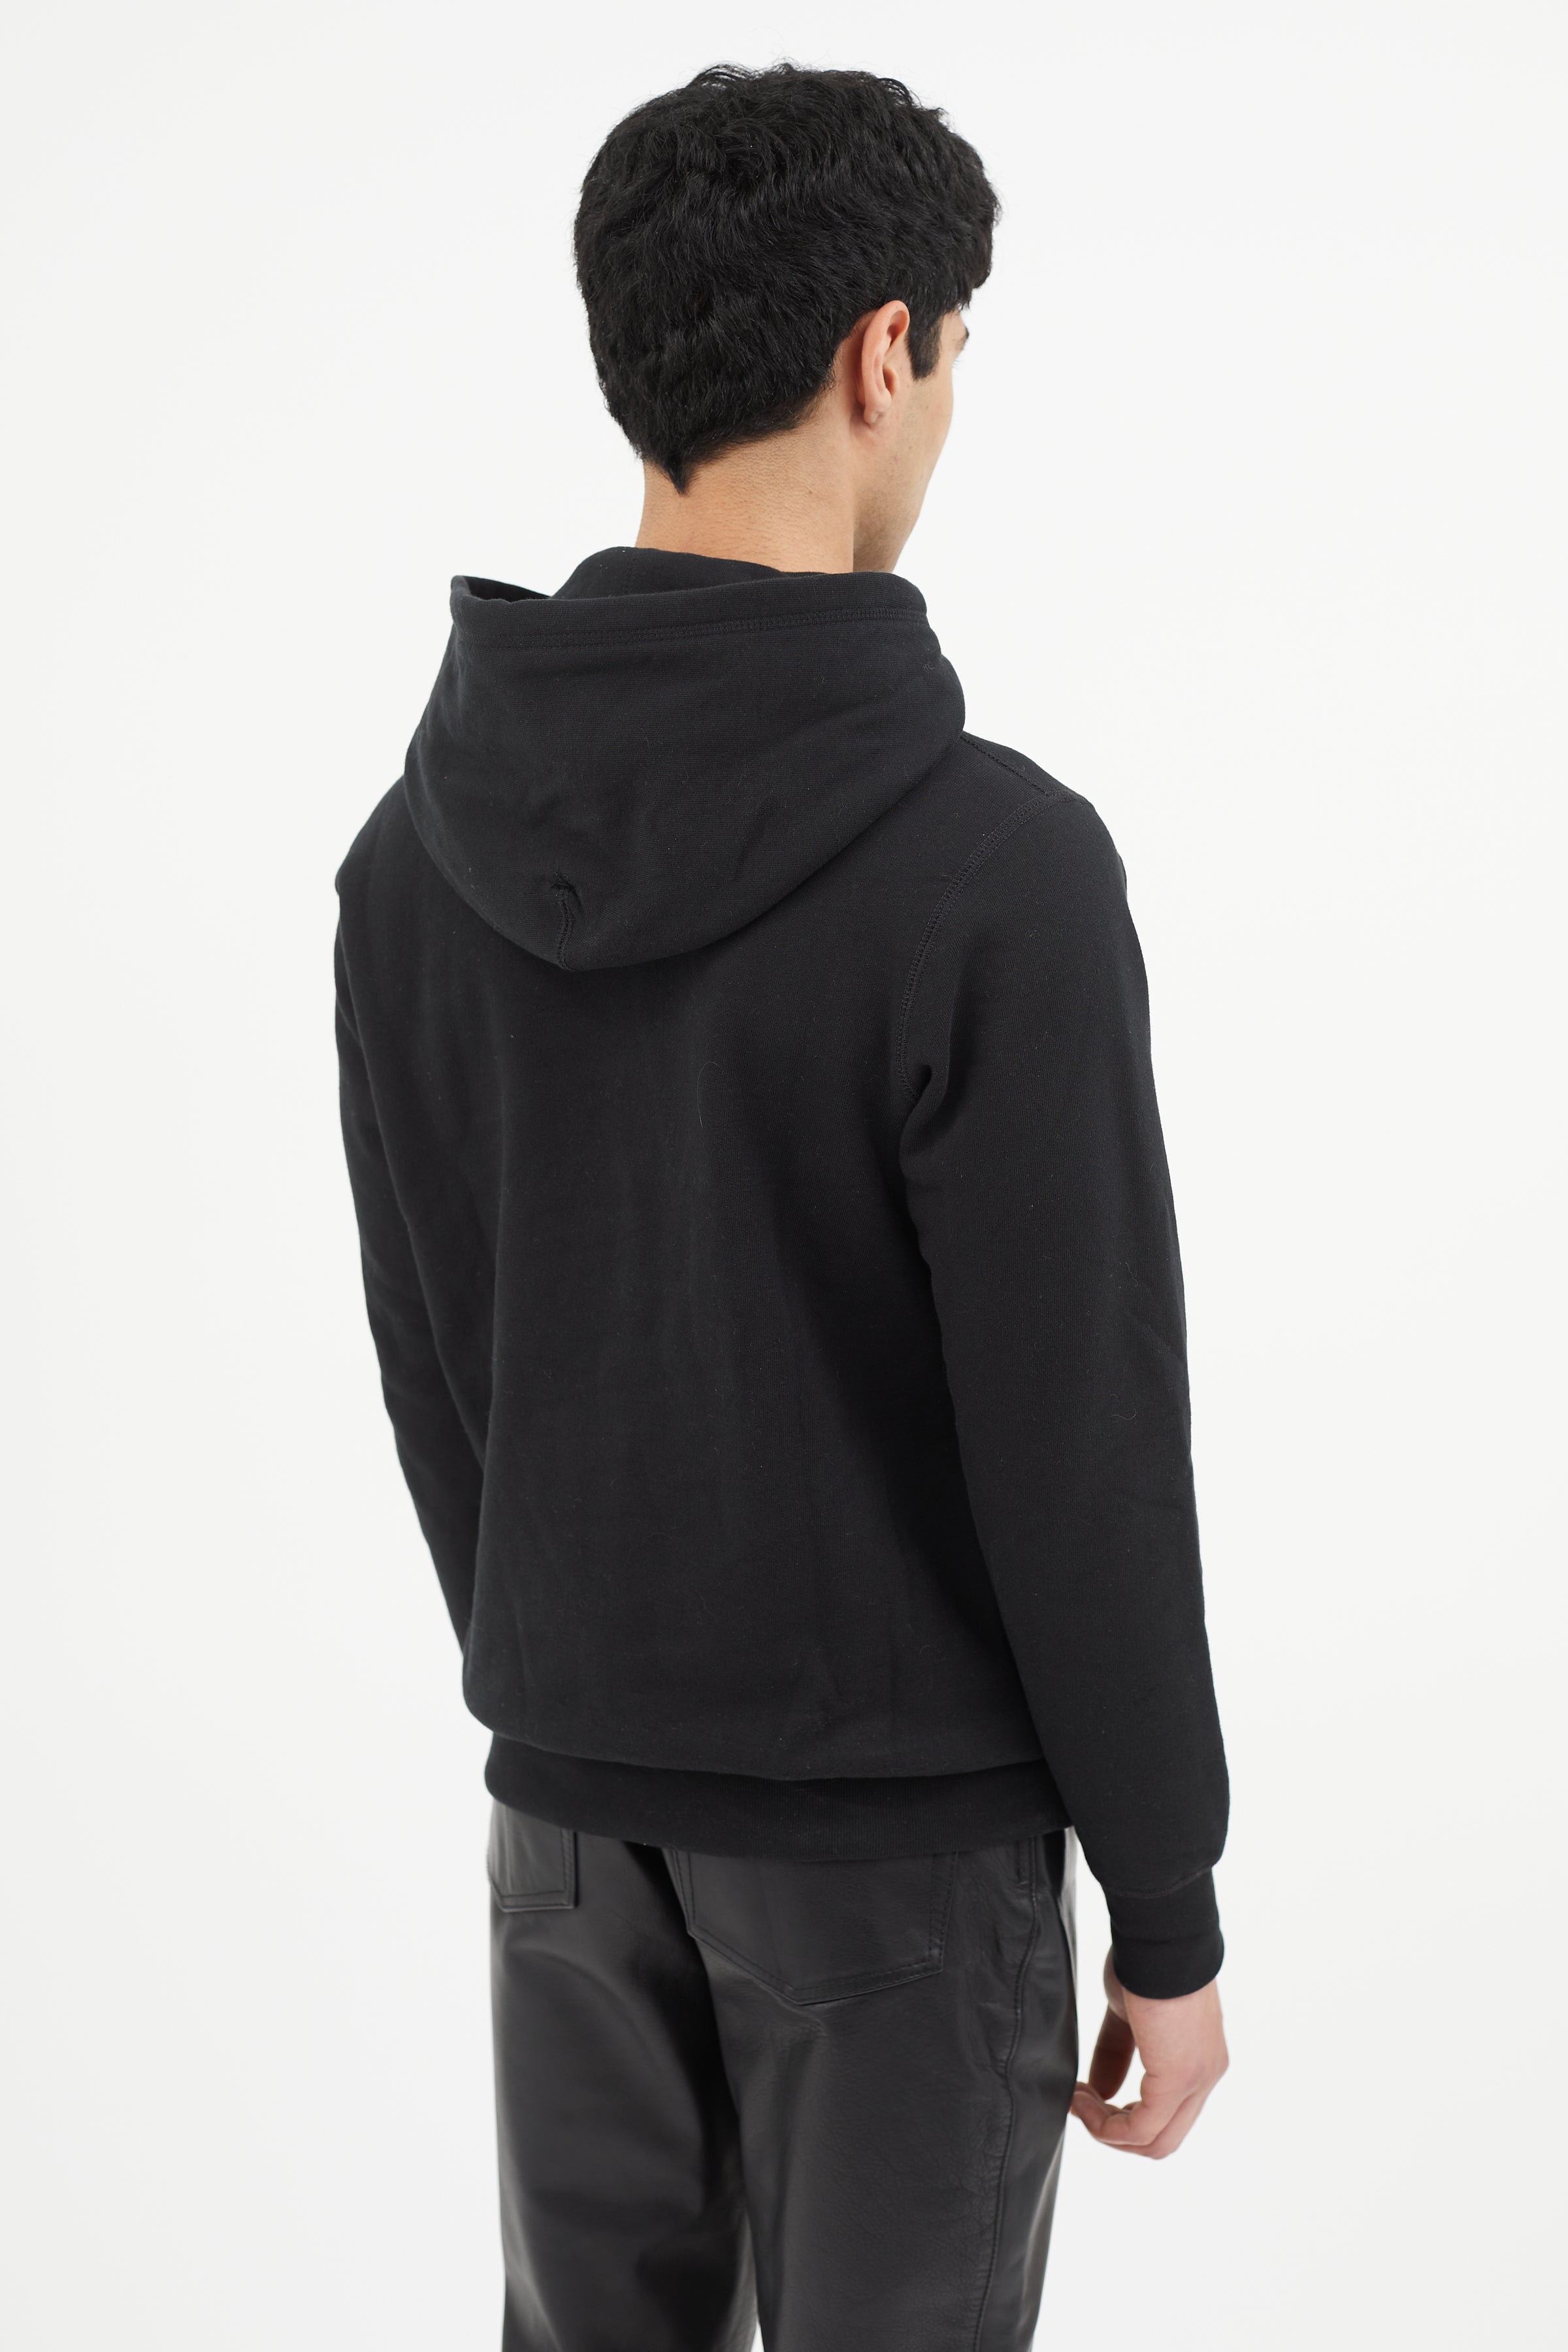 Takashi Murakami - Authenticated Sweatshirt - Cotton Black Plain for Men, Very Good Condition